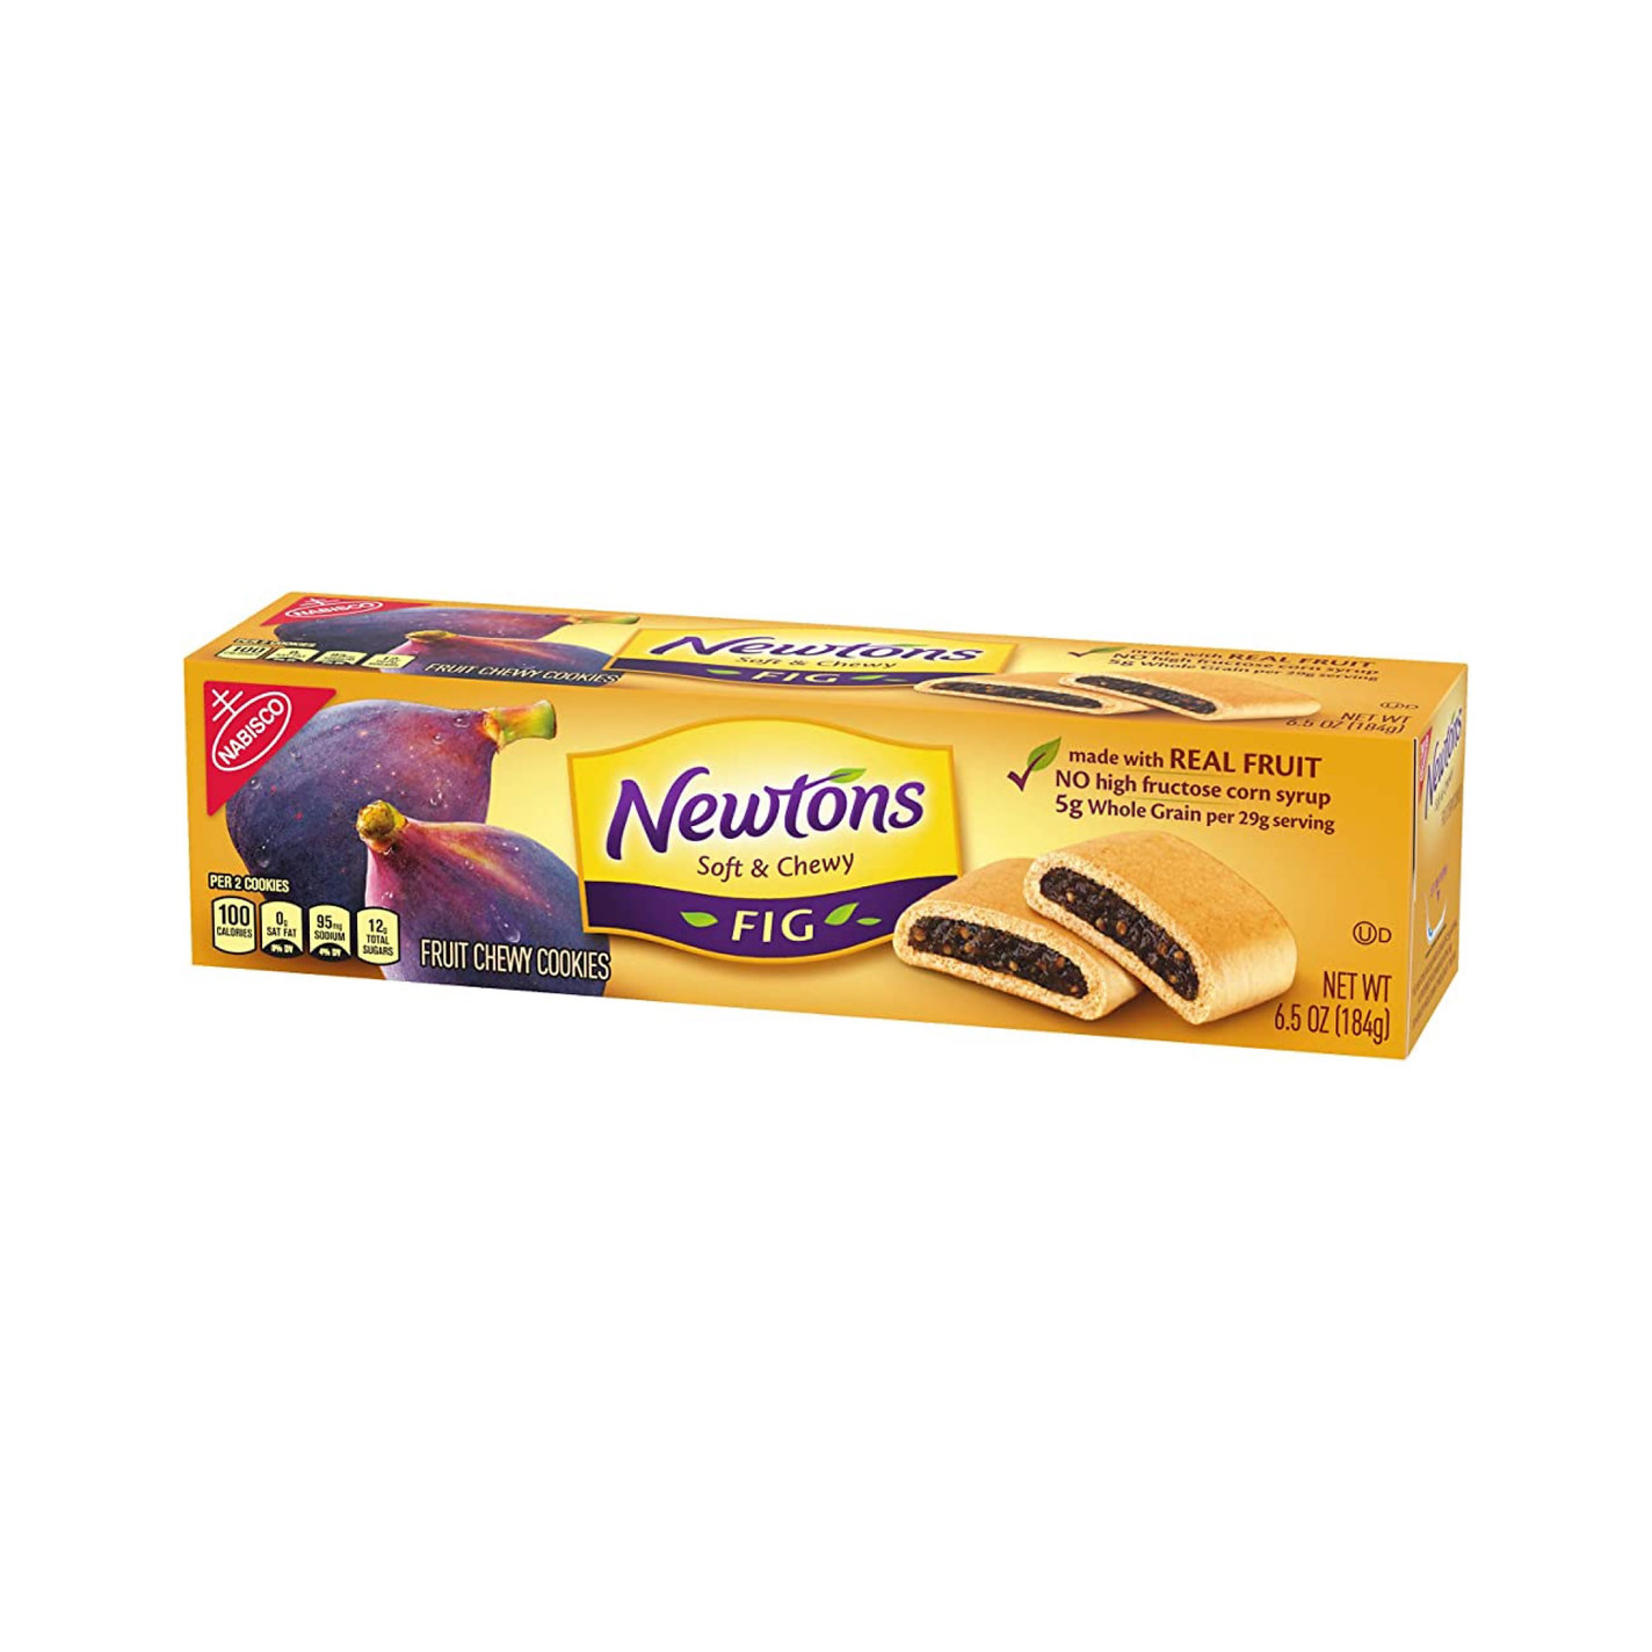 Newtons Fig Original Fruit Chewy Cookies 184g *B/B JUL 17 2023